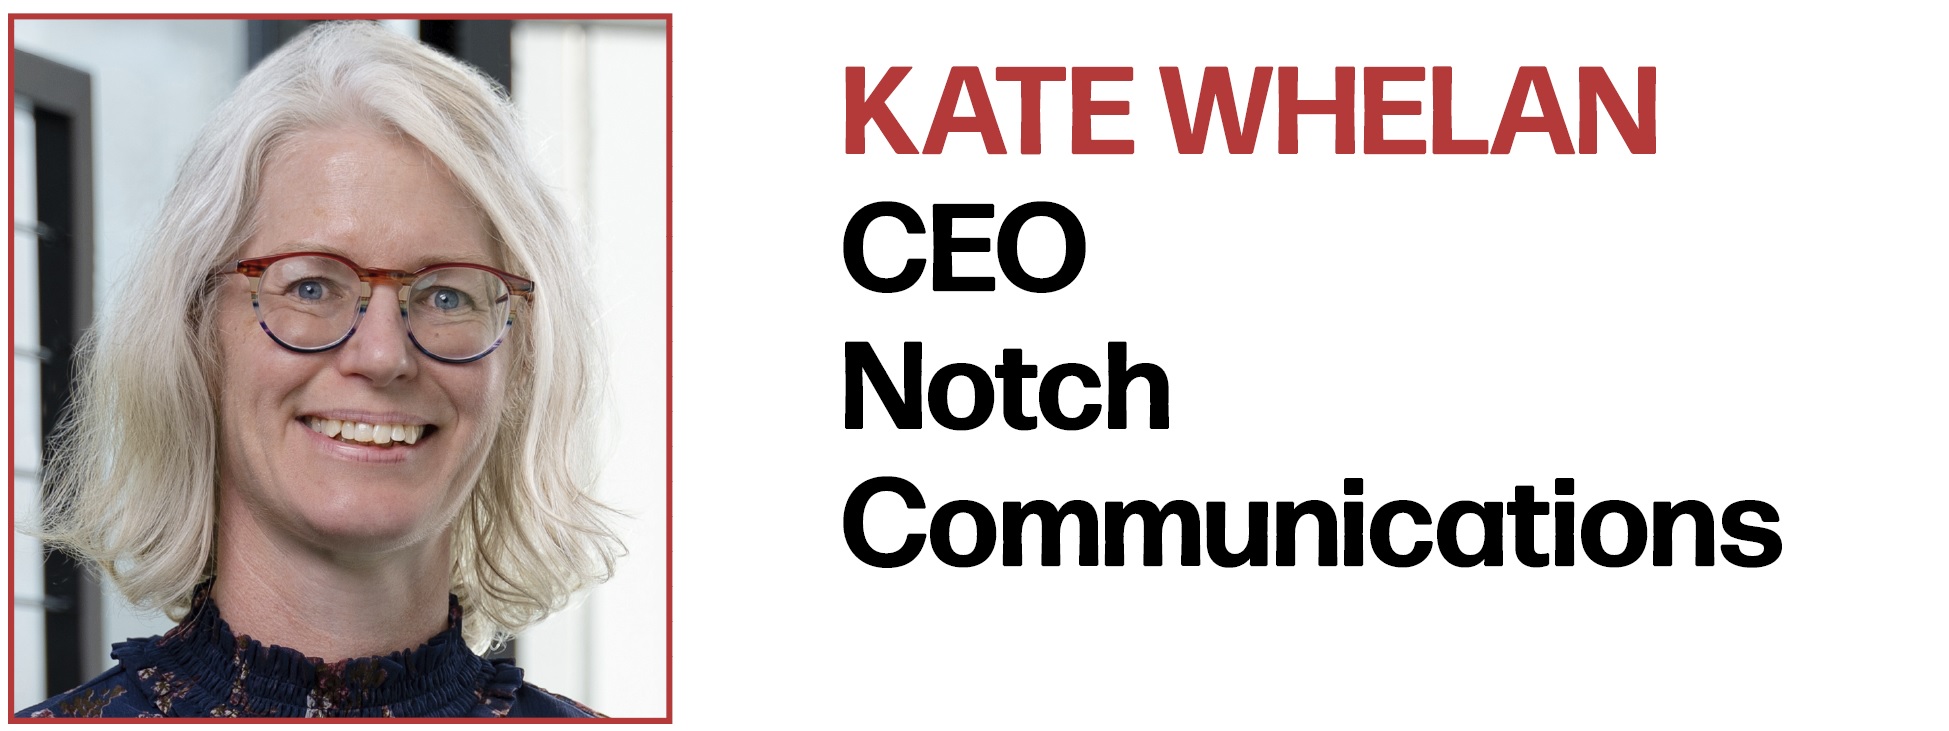 Kate Whelan CEO Notch Communications